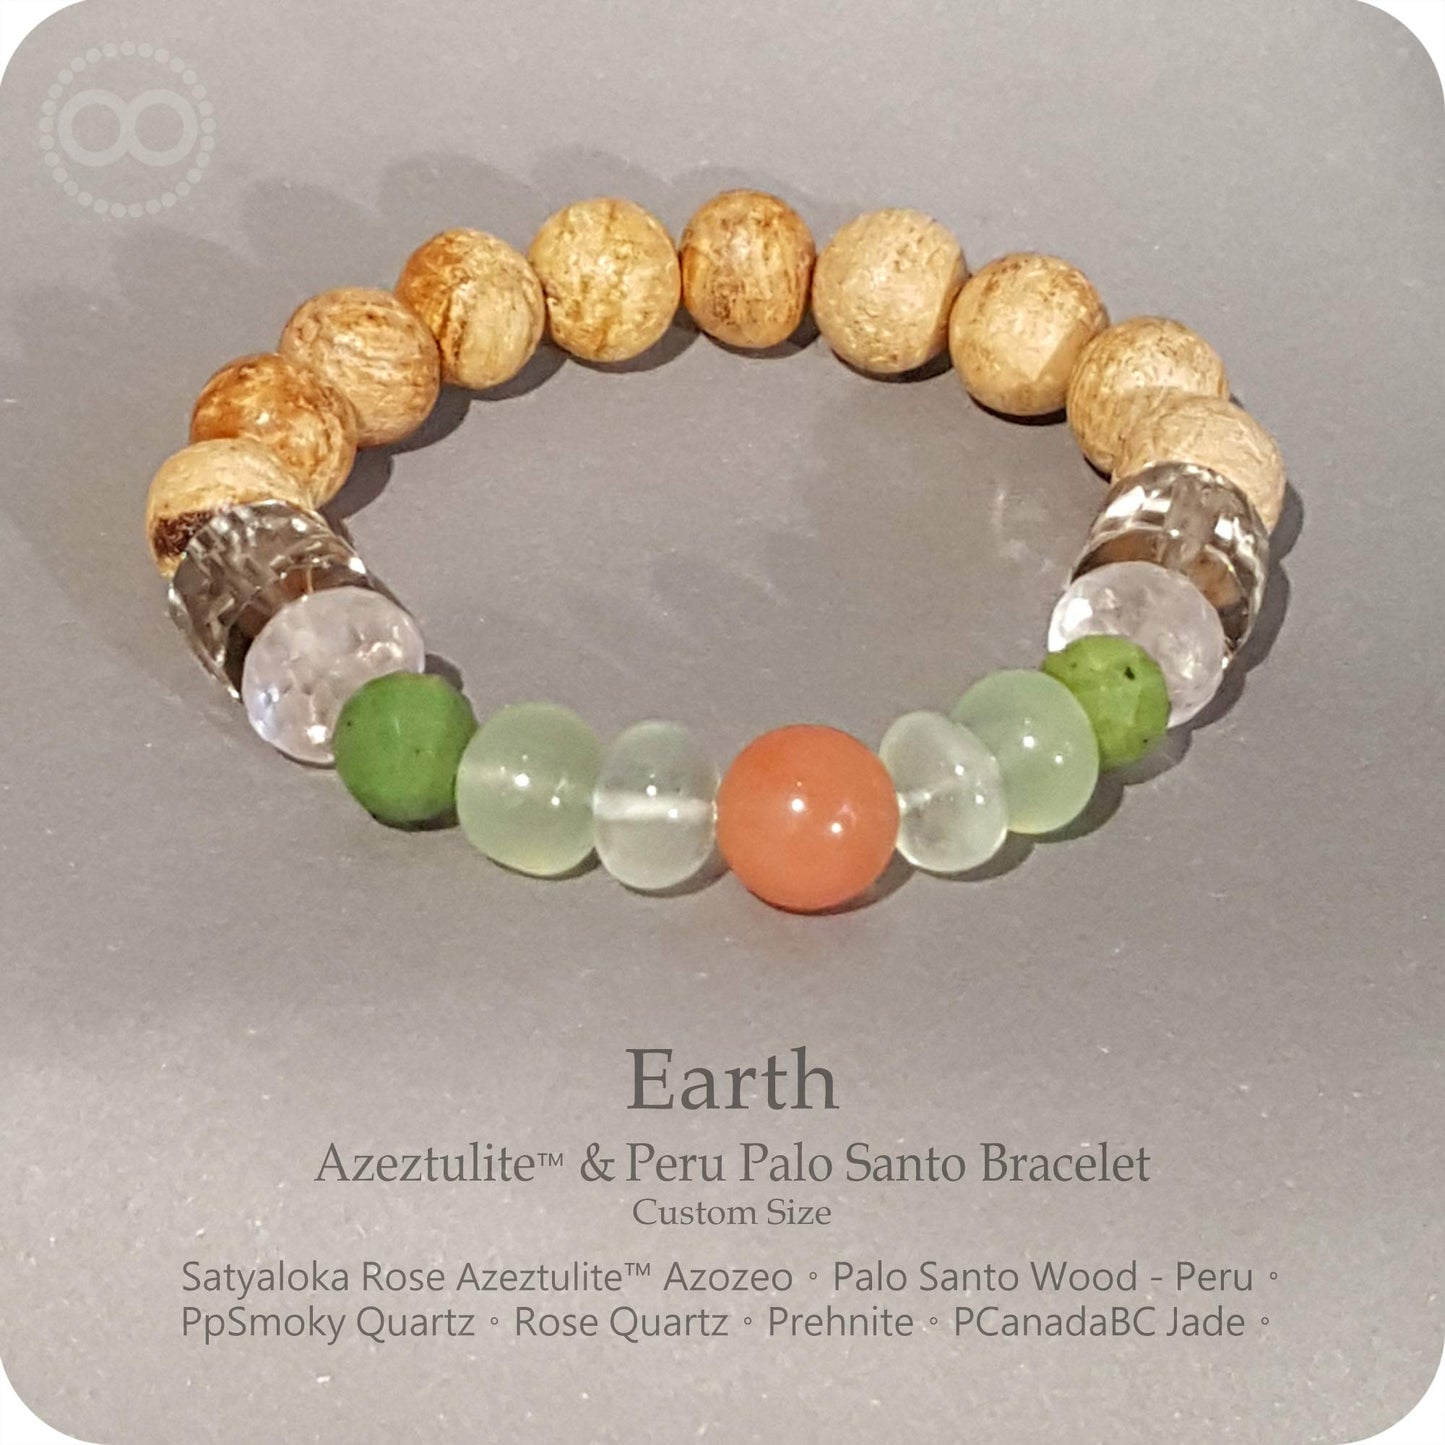 Earth Bracelet 阿賽斯特萊石 祕魯聖木手環 - EB219